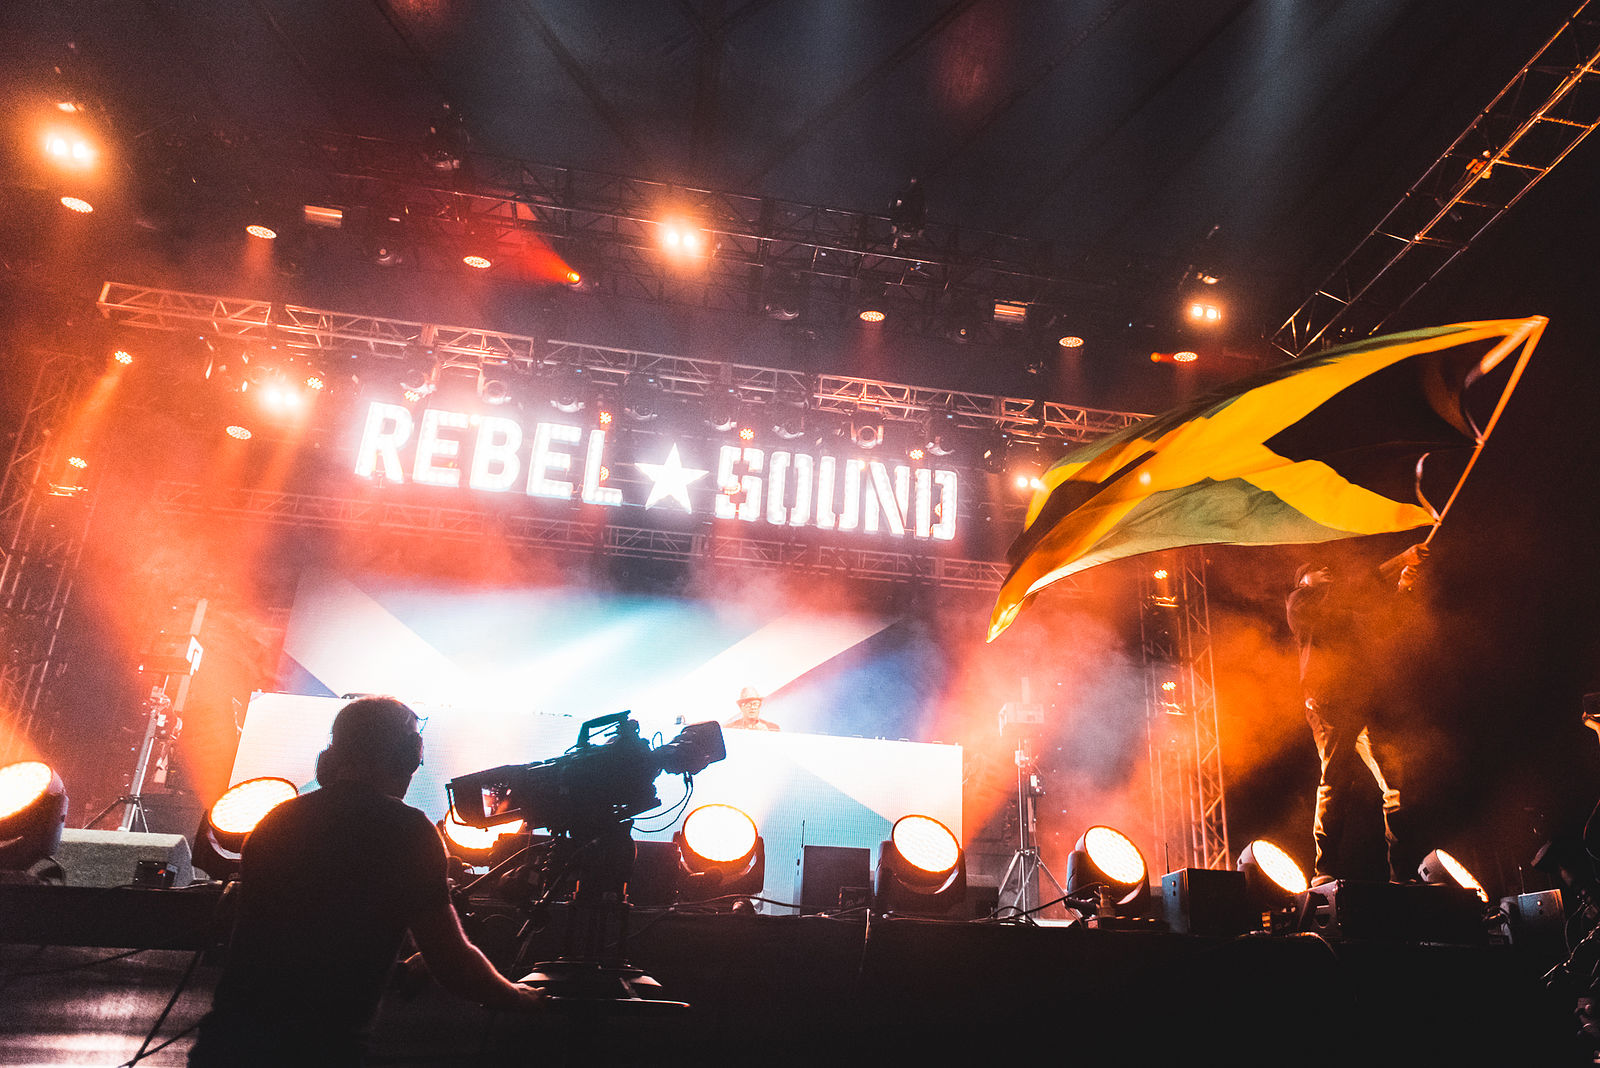 Rebel Sound